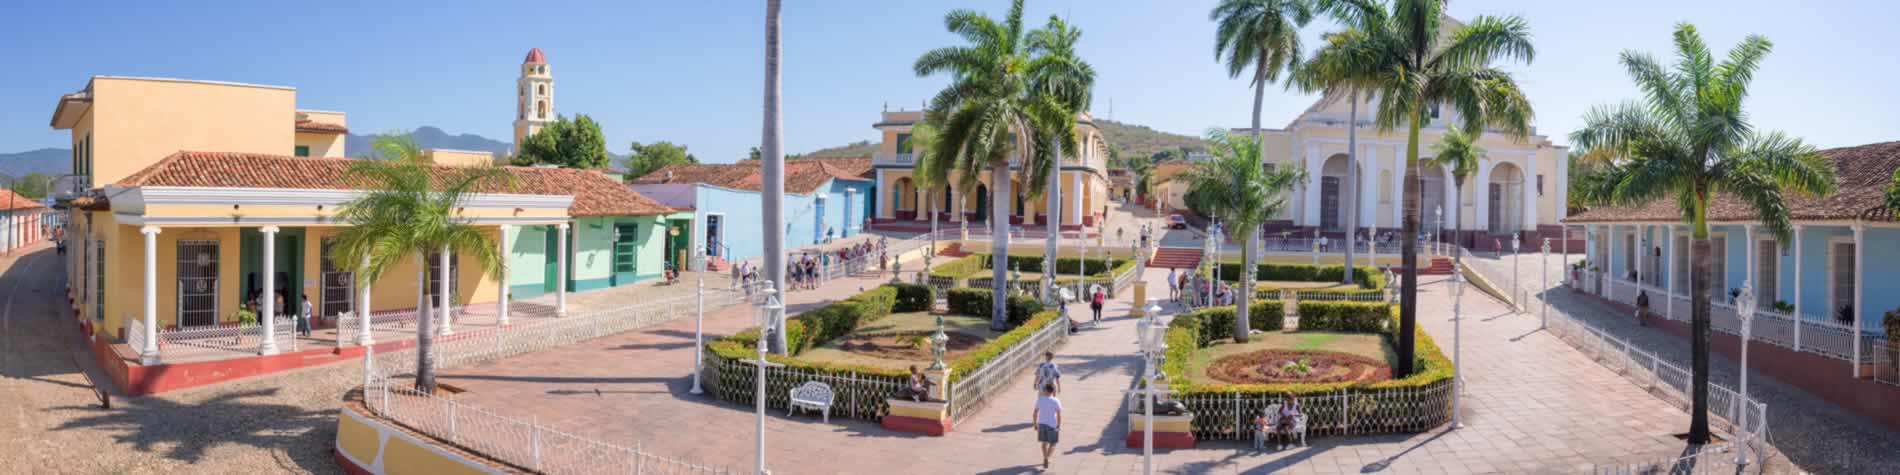 View of the Playa Mayor